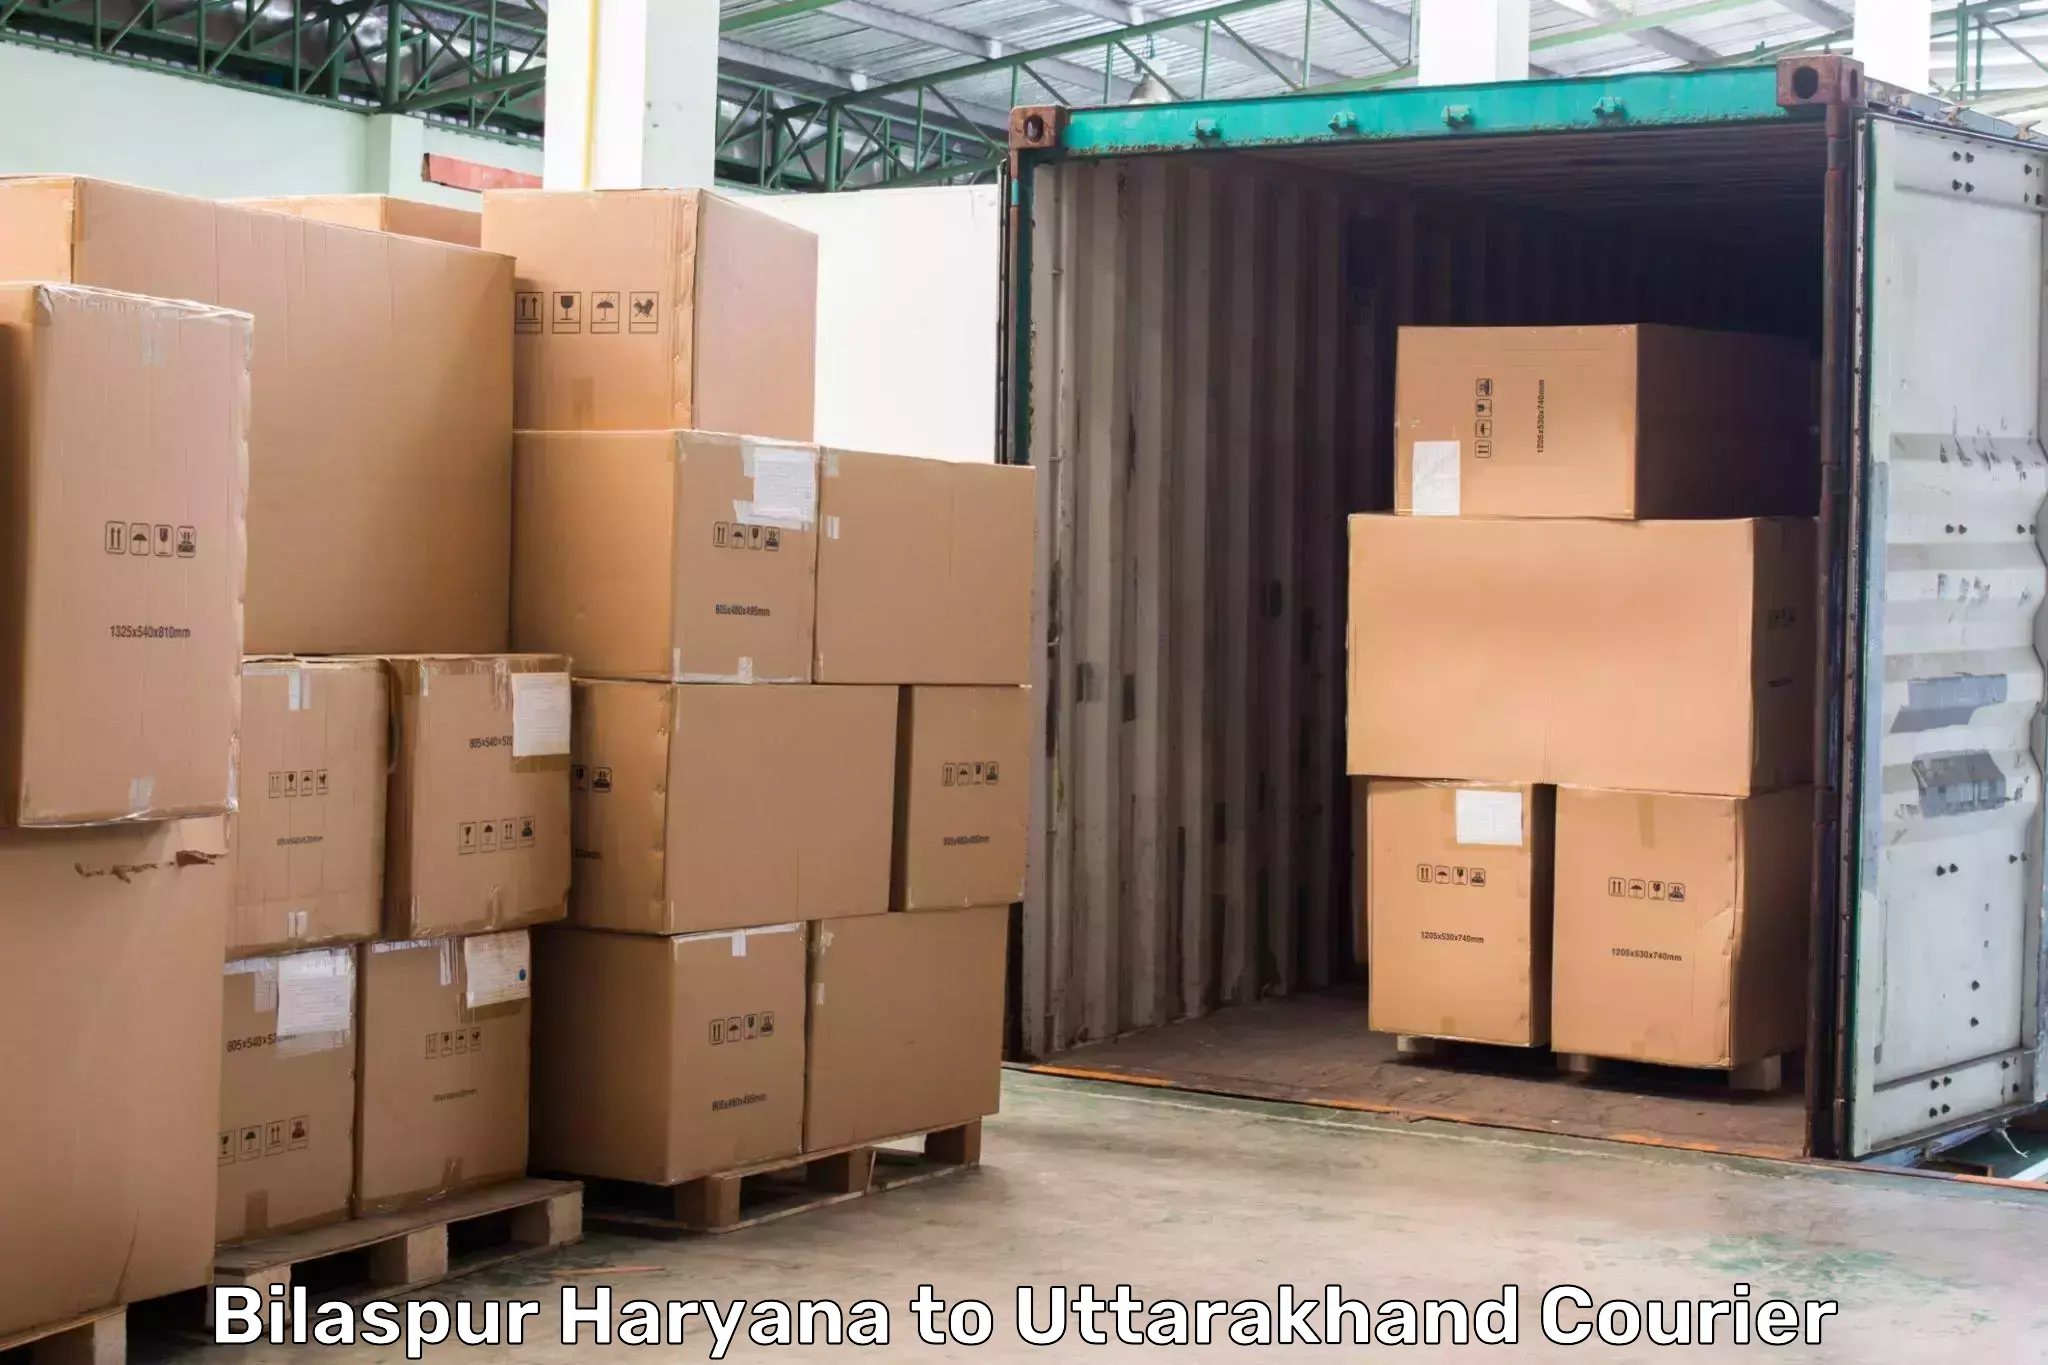 Courier service partnerships Bilaspur Haryana to Uttarakhand